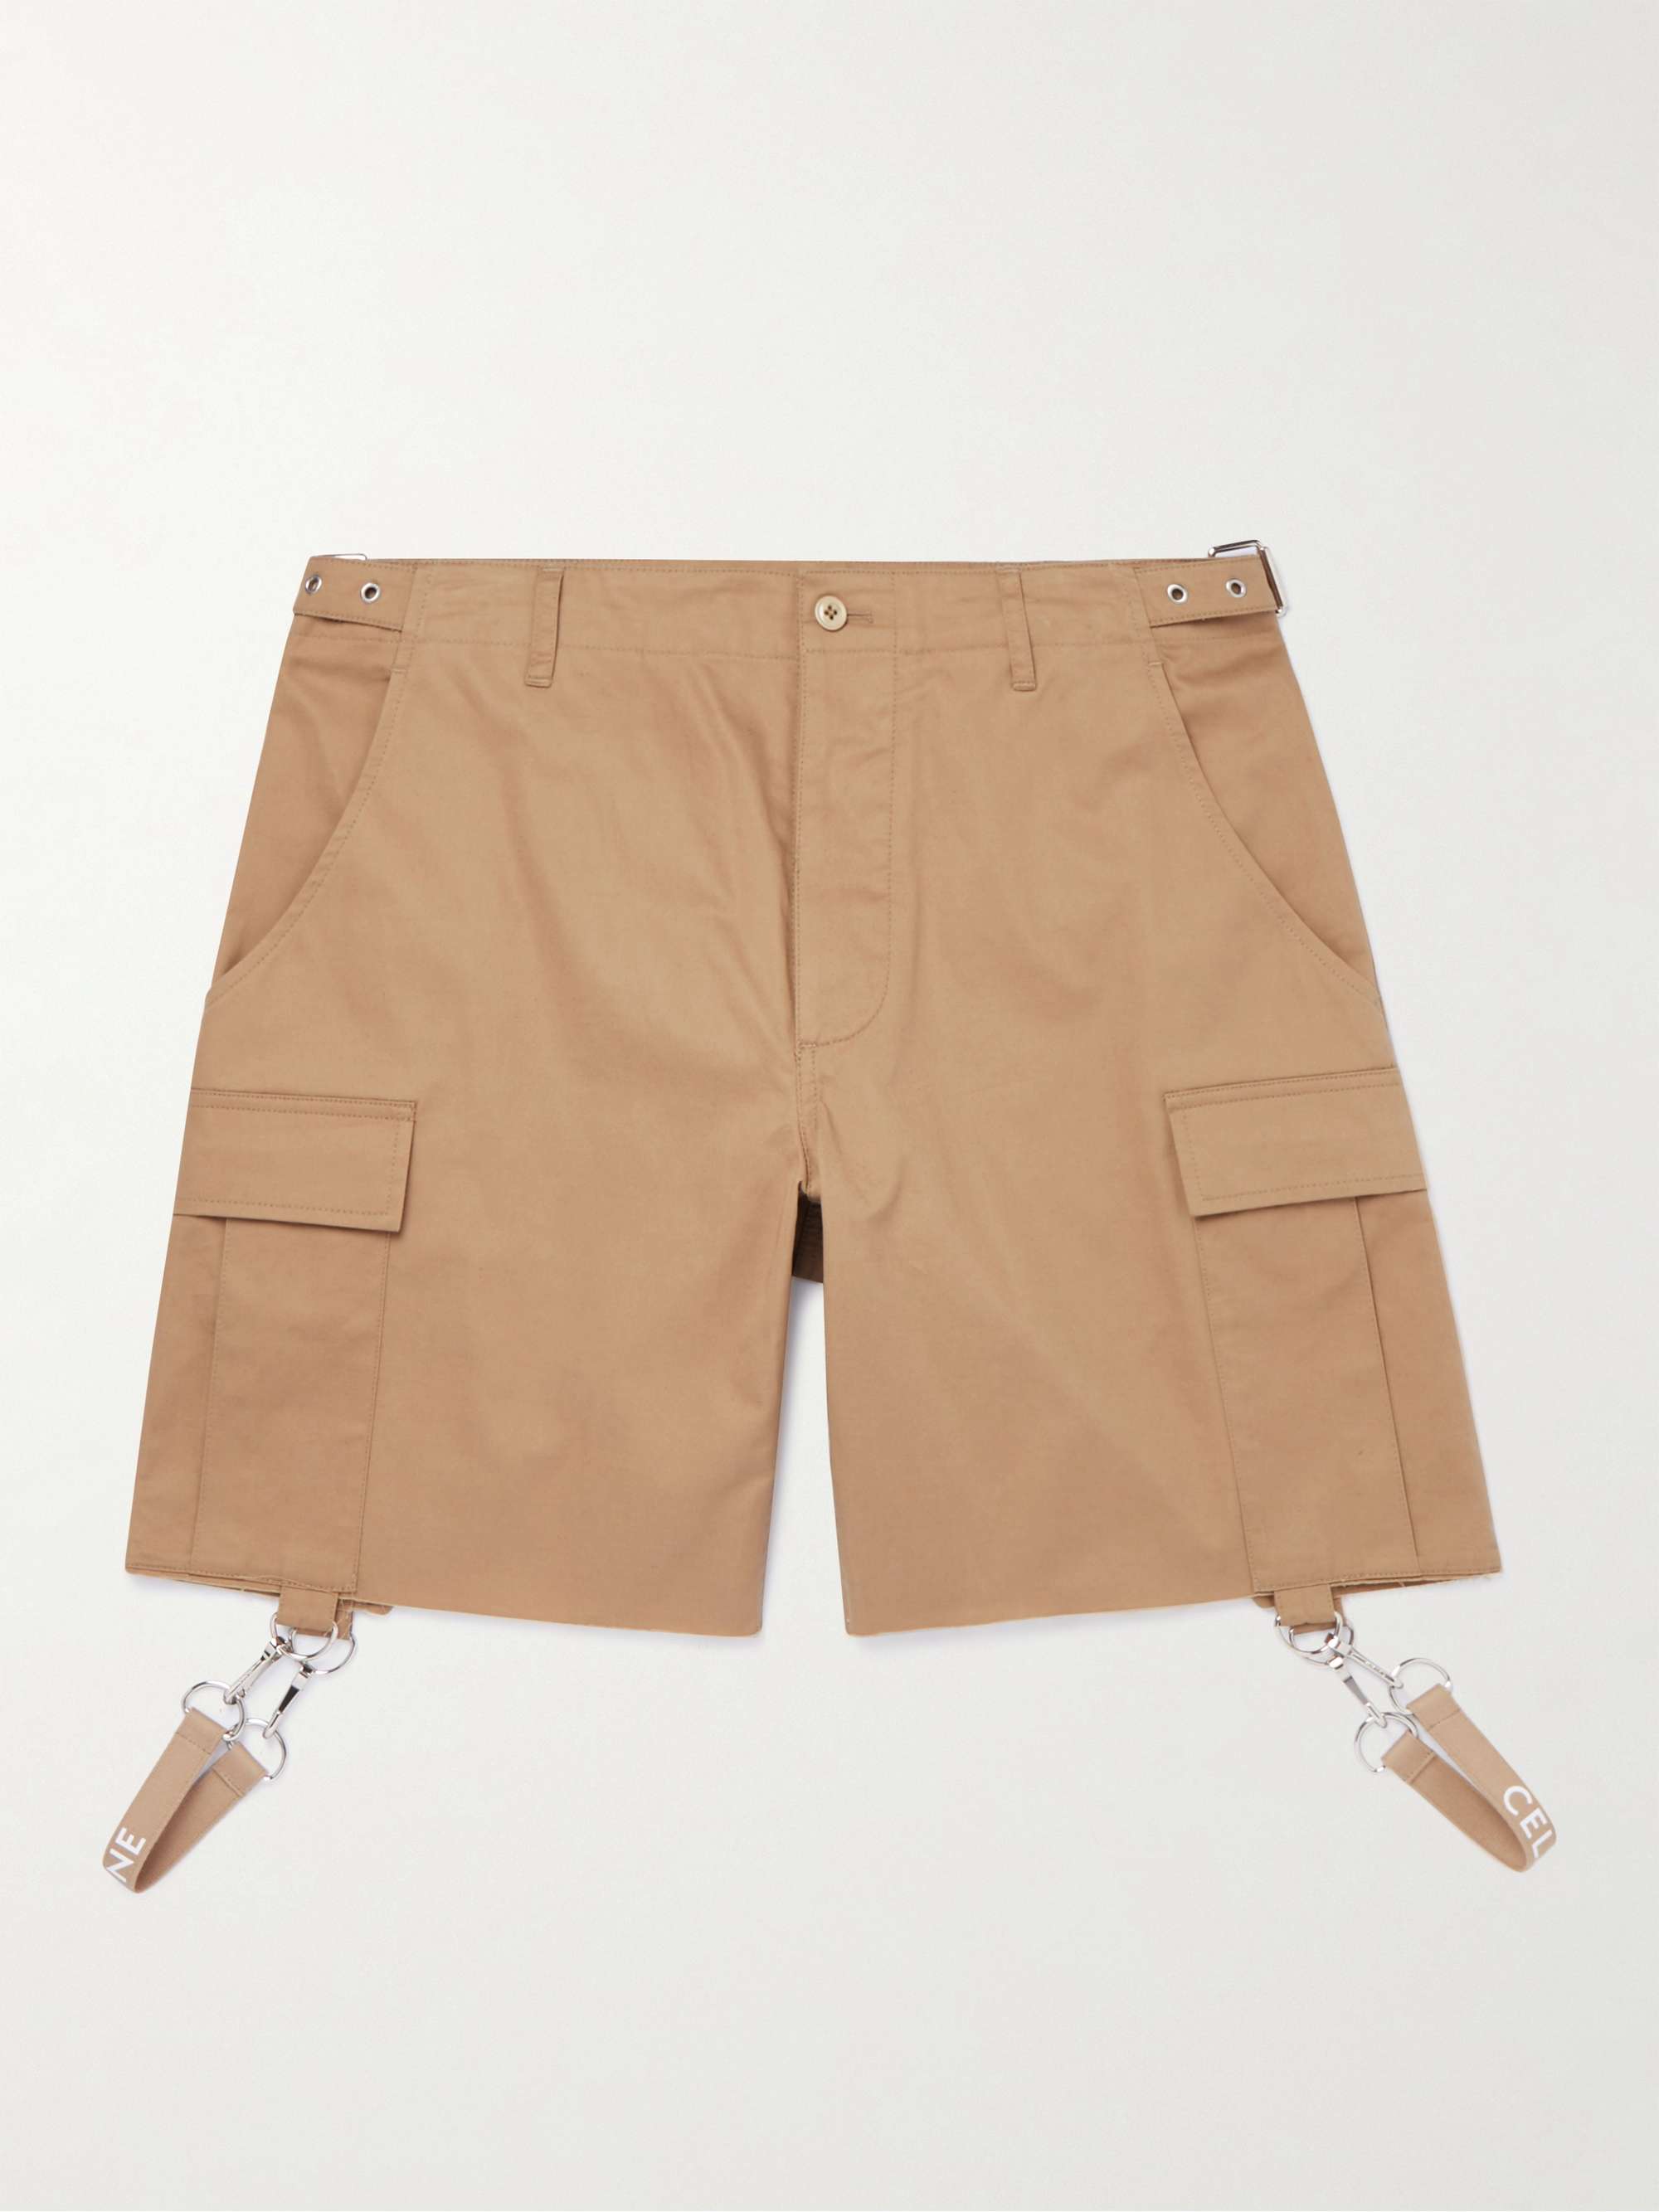 CELINE HOMME Wide-Leg Strap-Detailed Cotton and Linen-Blend Cargo Shorts